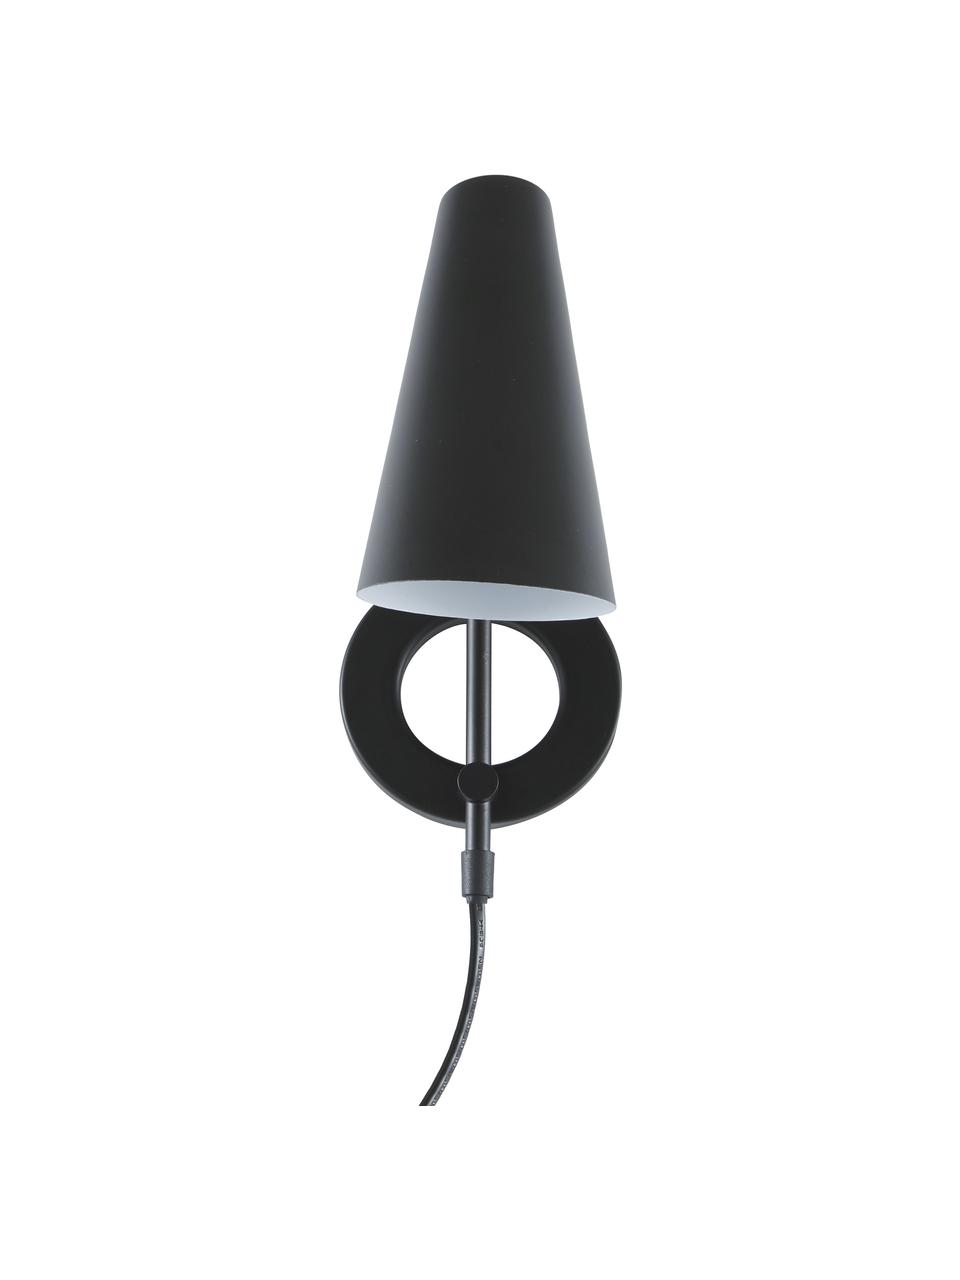 Verstelbare wandlamp Cal met stekker, Lampenkap: gelakt metaal, Frame: gelakt metaal, Zwart. Lampenkap binnenzijde: wit, D 27 x H 27 cm